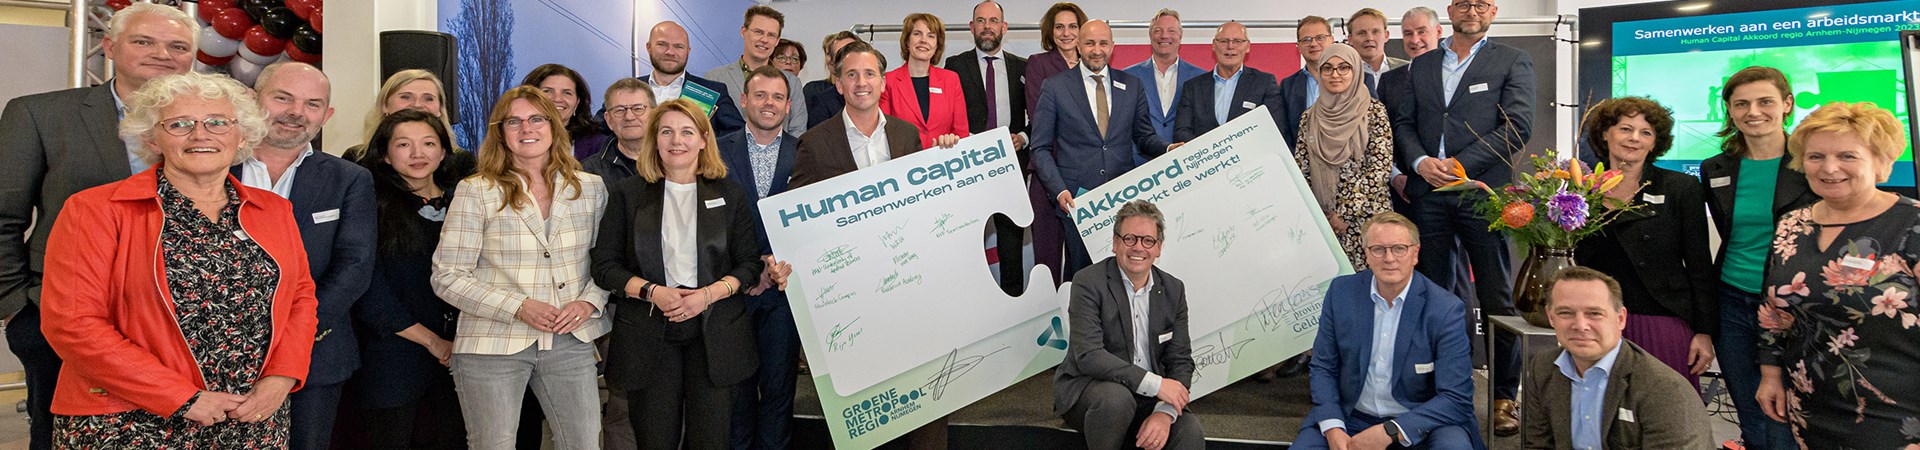 Ondertekening Human Capital Akkoord Regio Arnhem Nijmegen